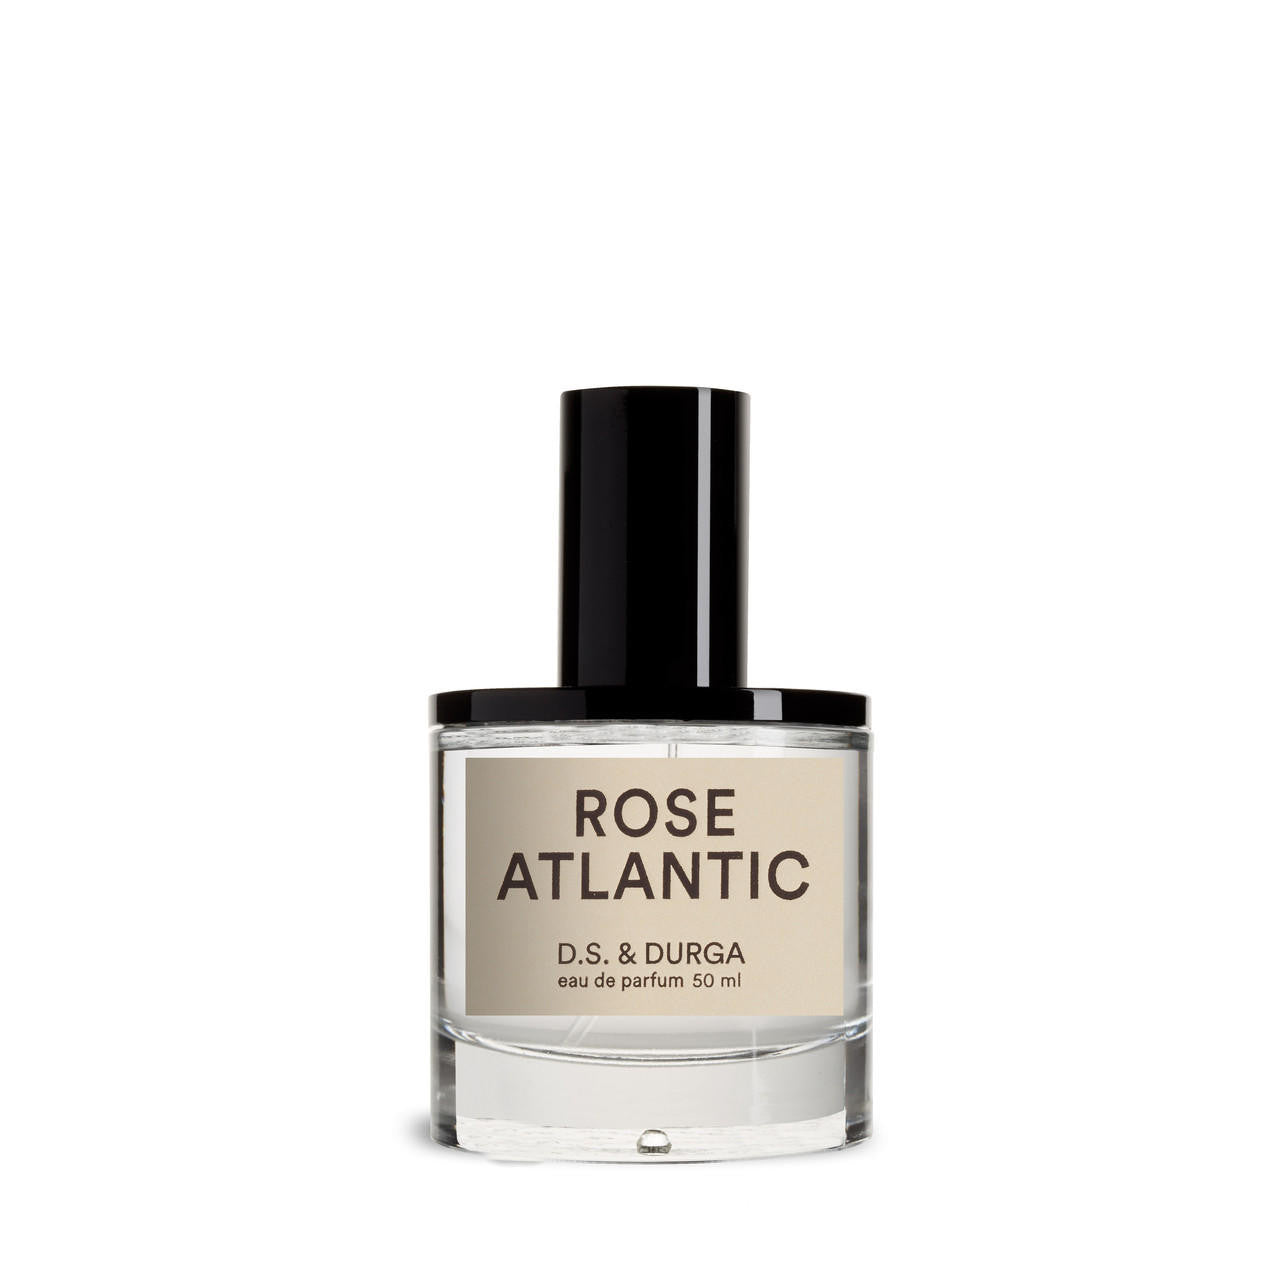 D.S. and DURGA D.S. & DURGA Rose Atlantic Eau de Parfum 